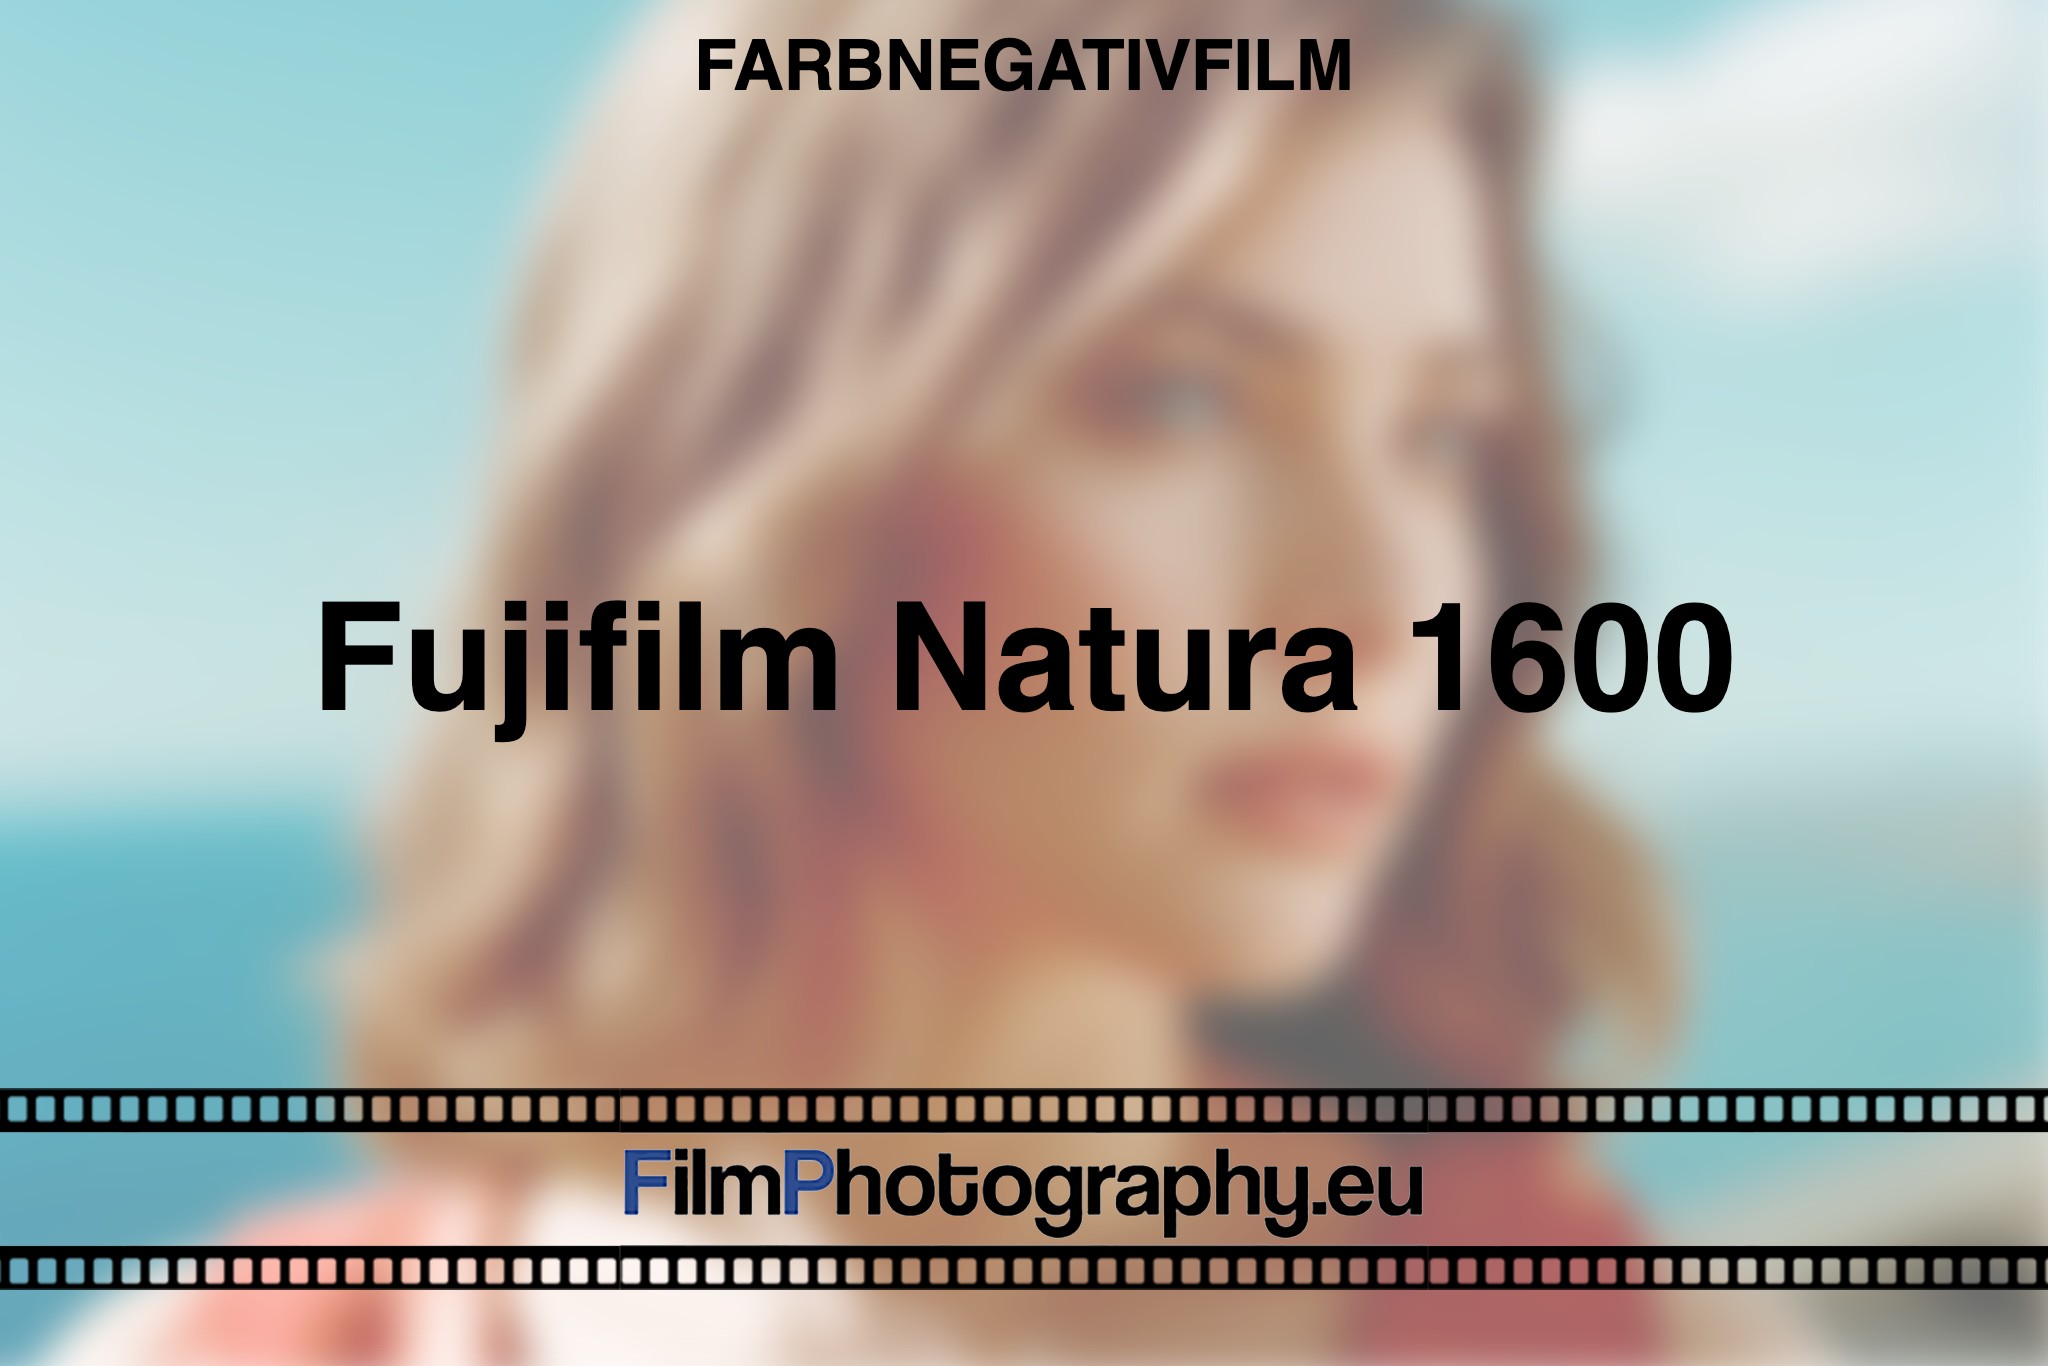 fujifilm-natura-1600-farbnegativfilm-bnv